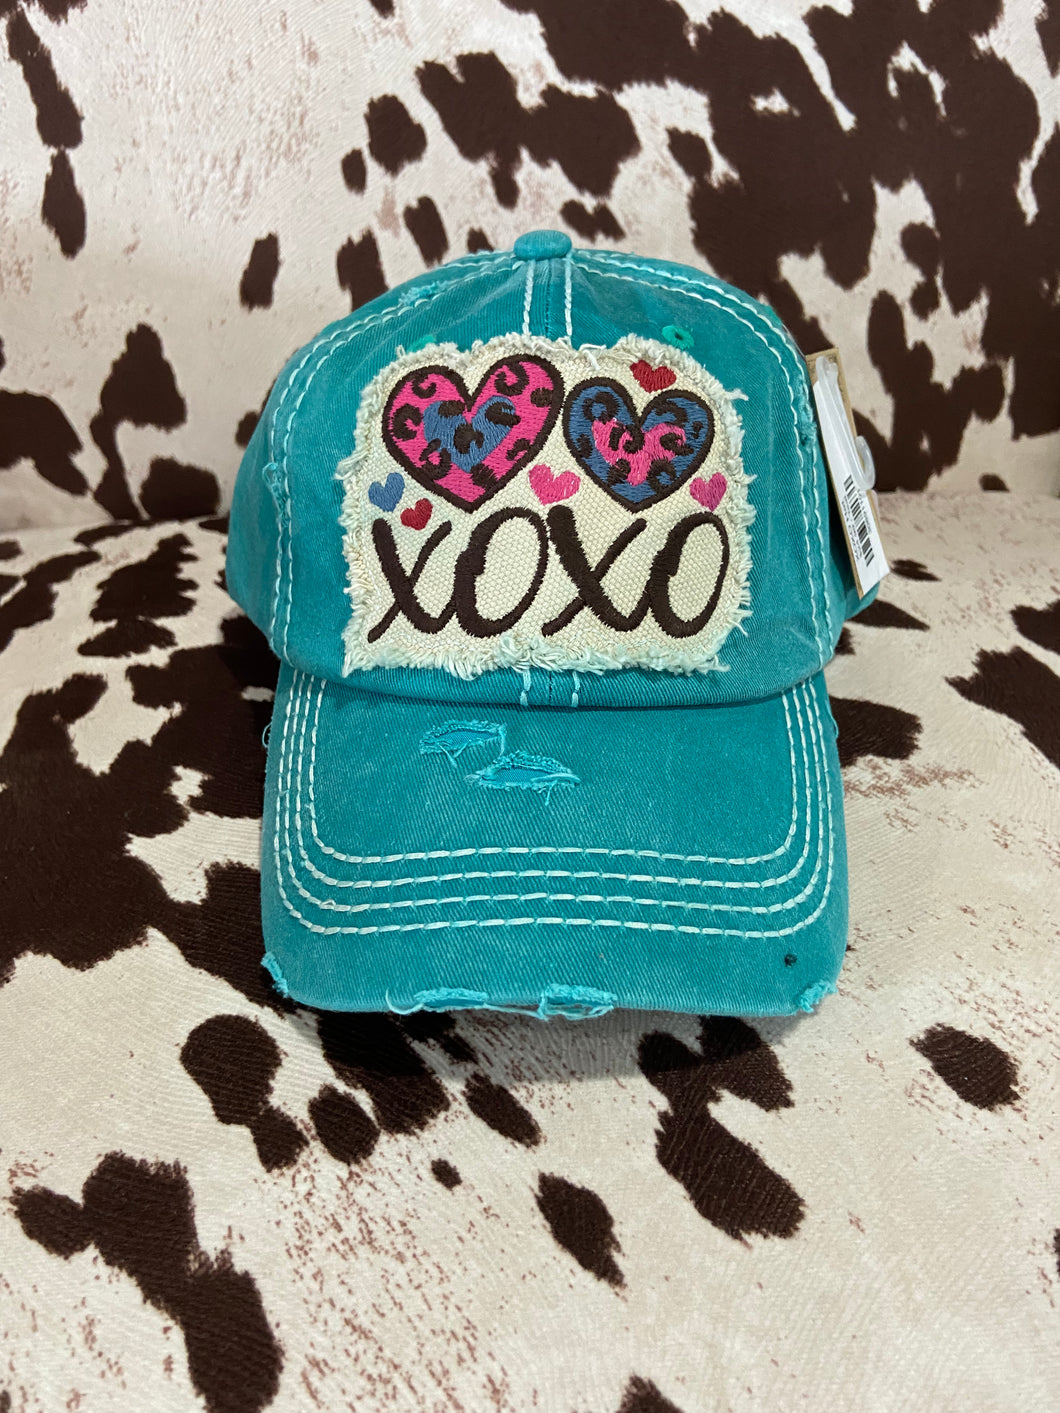 XOXO Hat